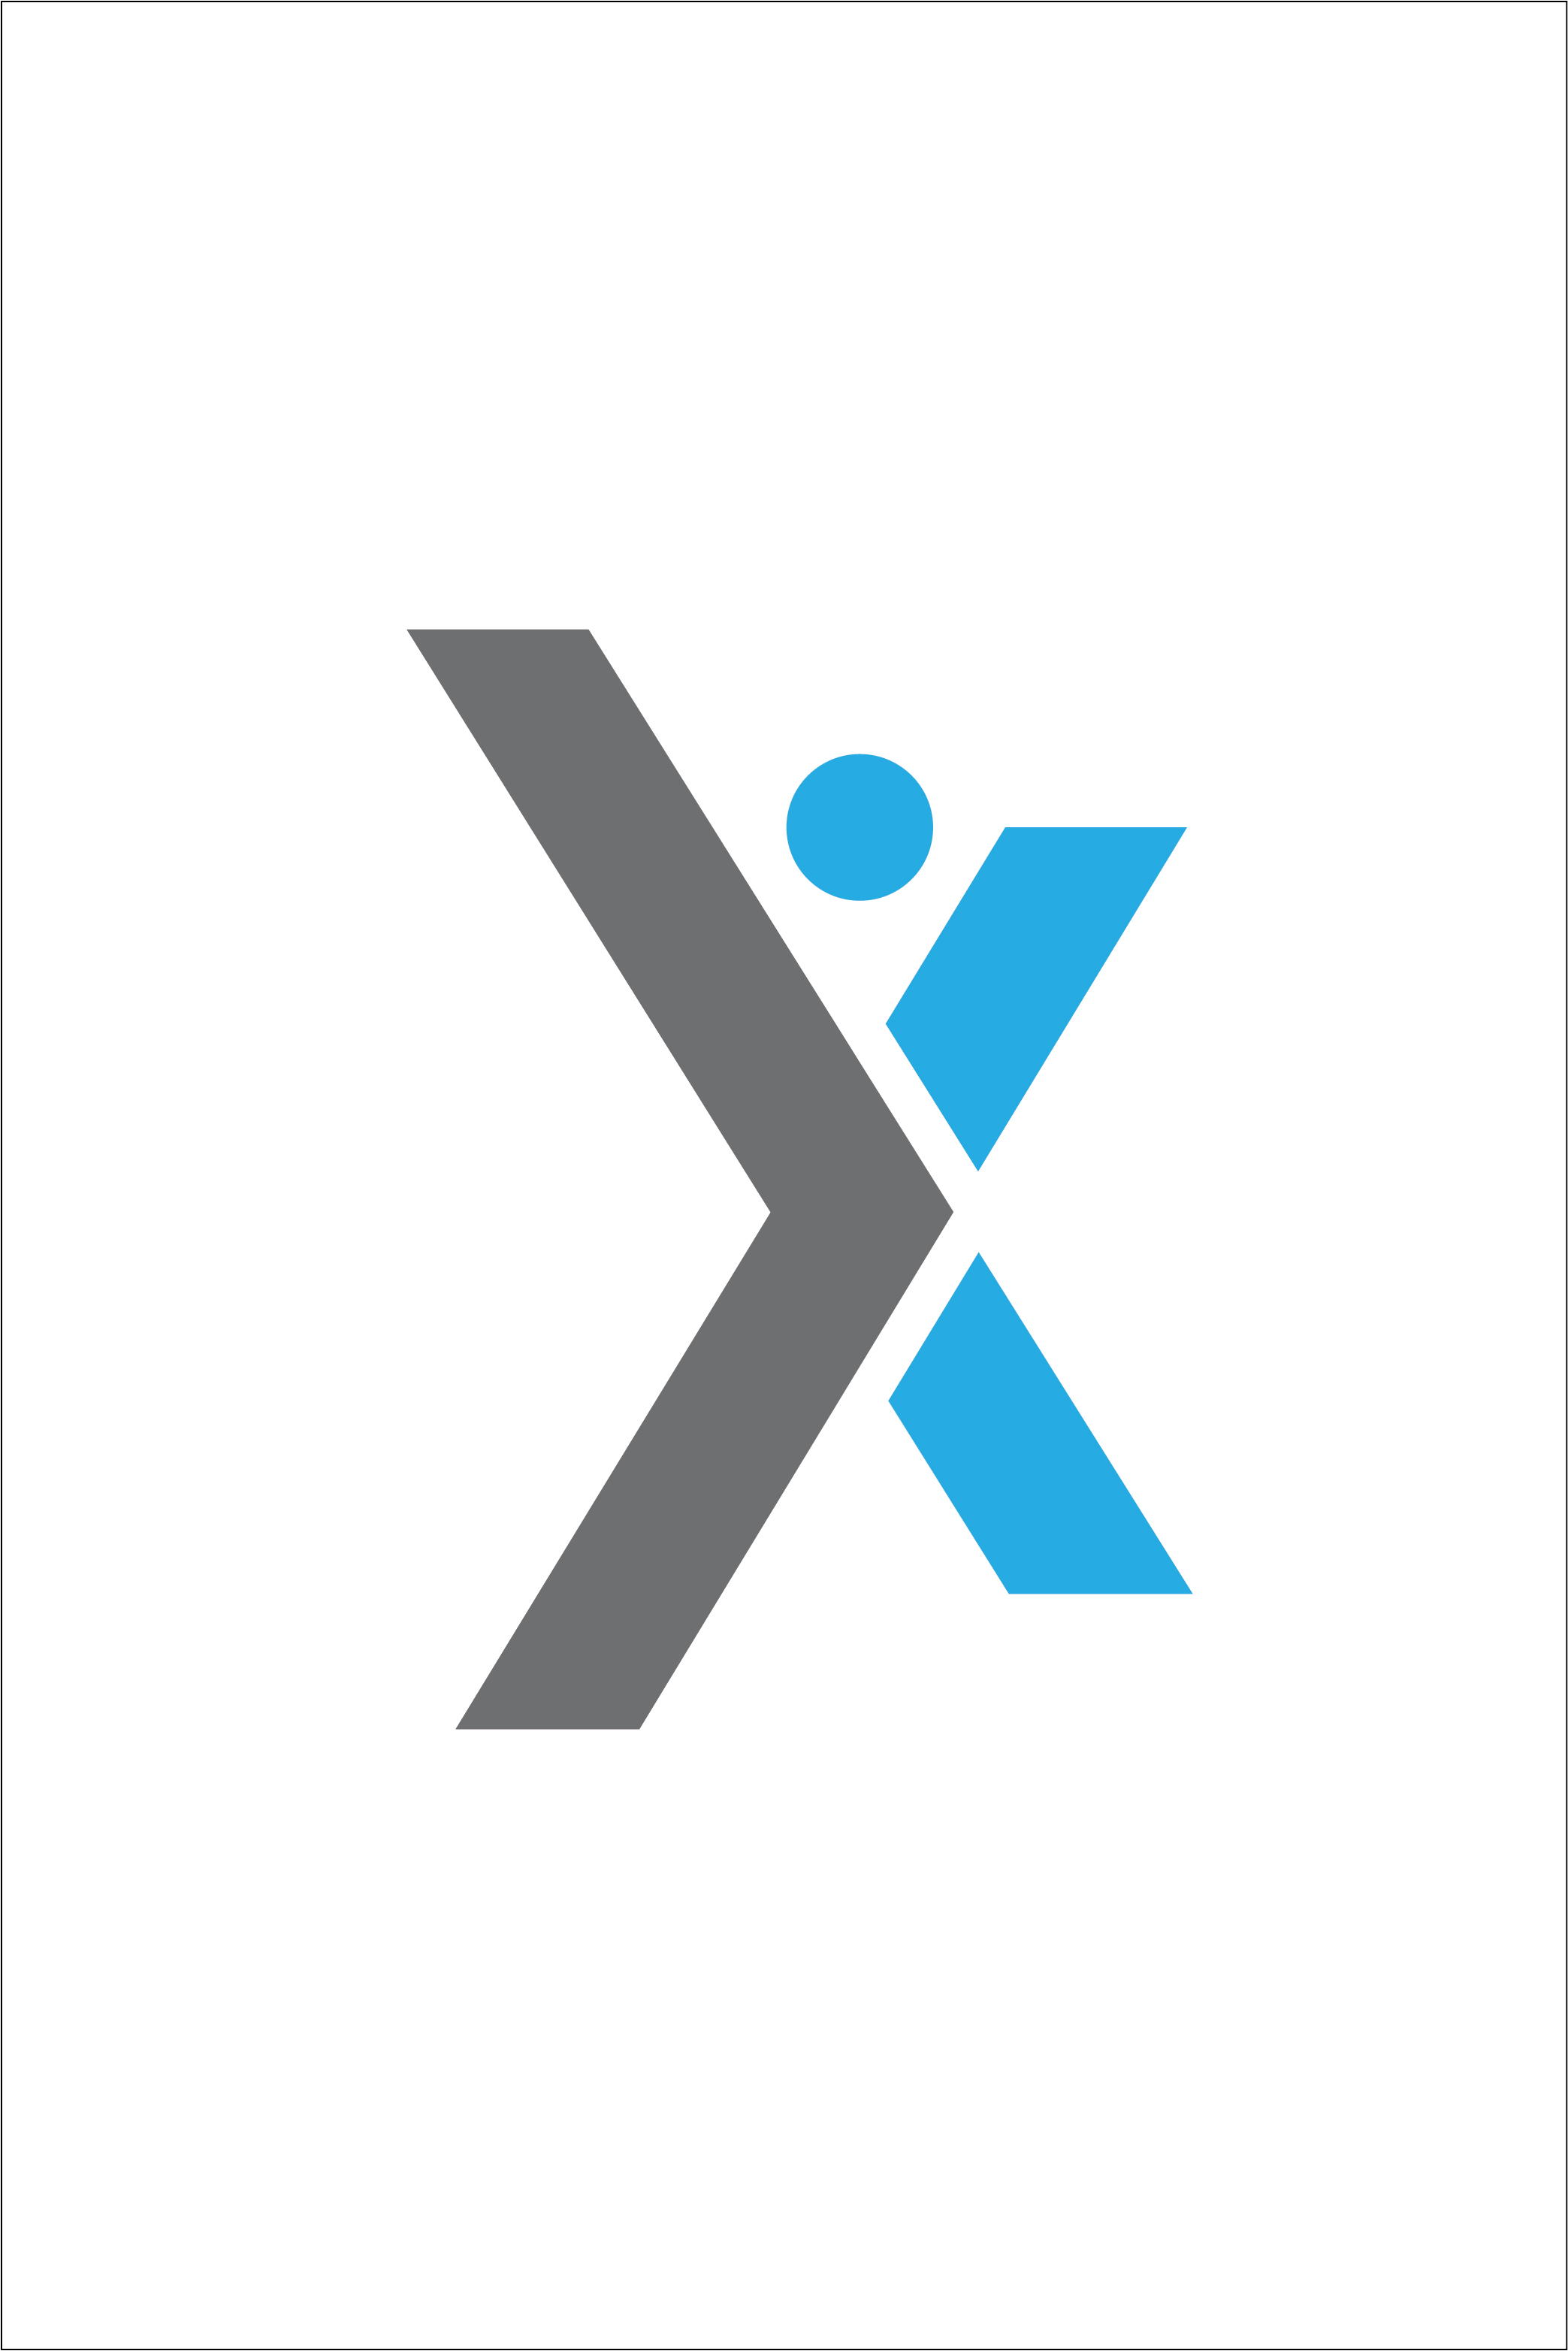 Letter X Logo Design Vector Image Template pinterest preview image.